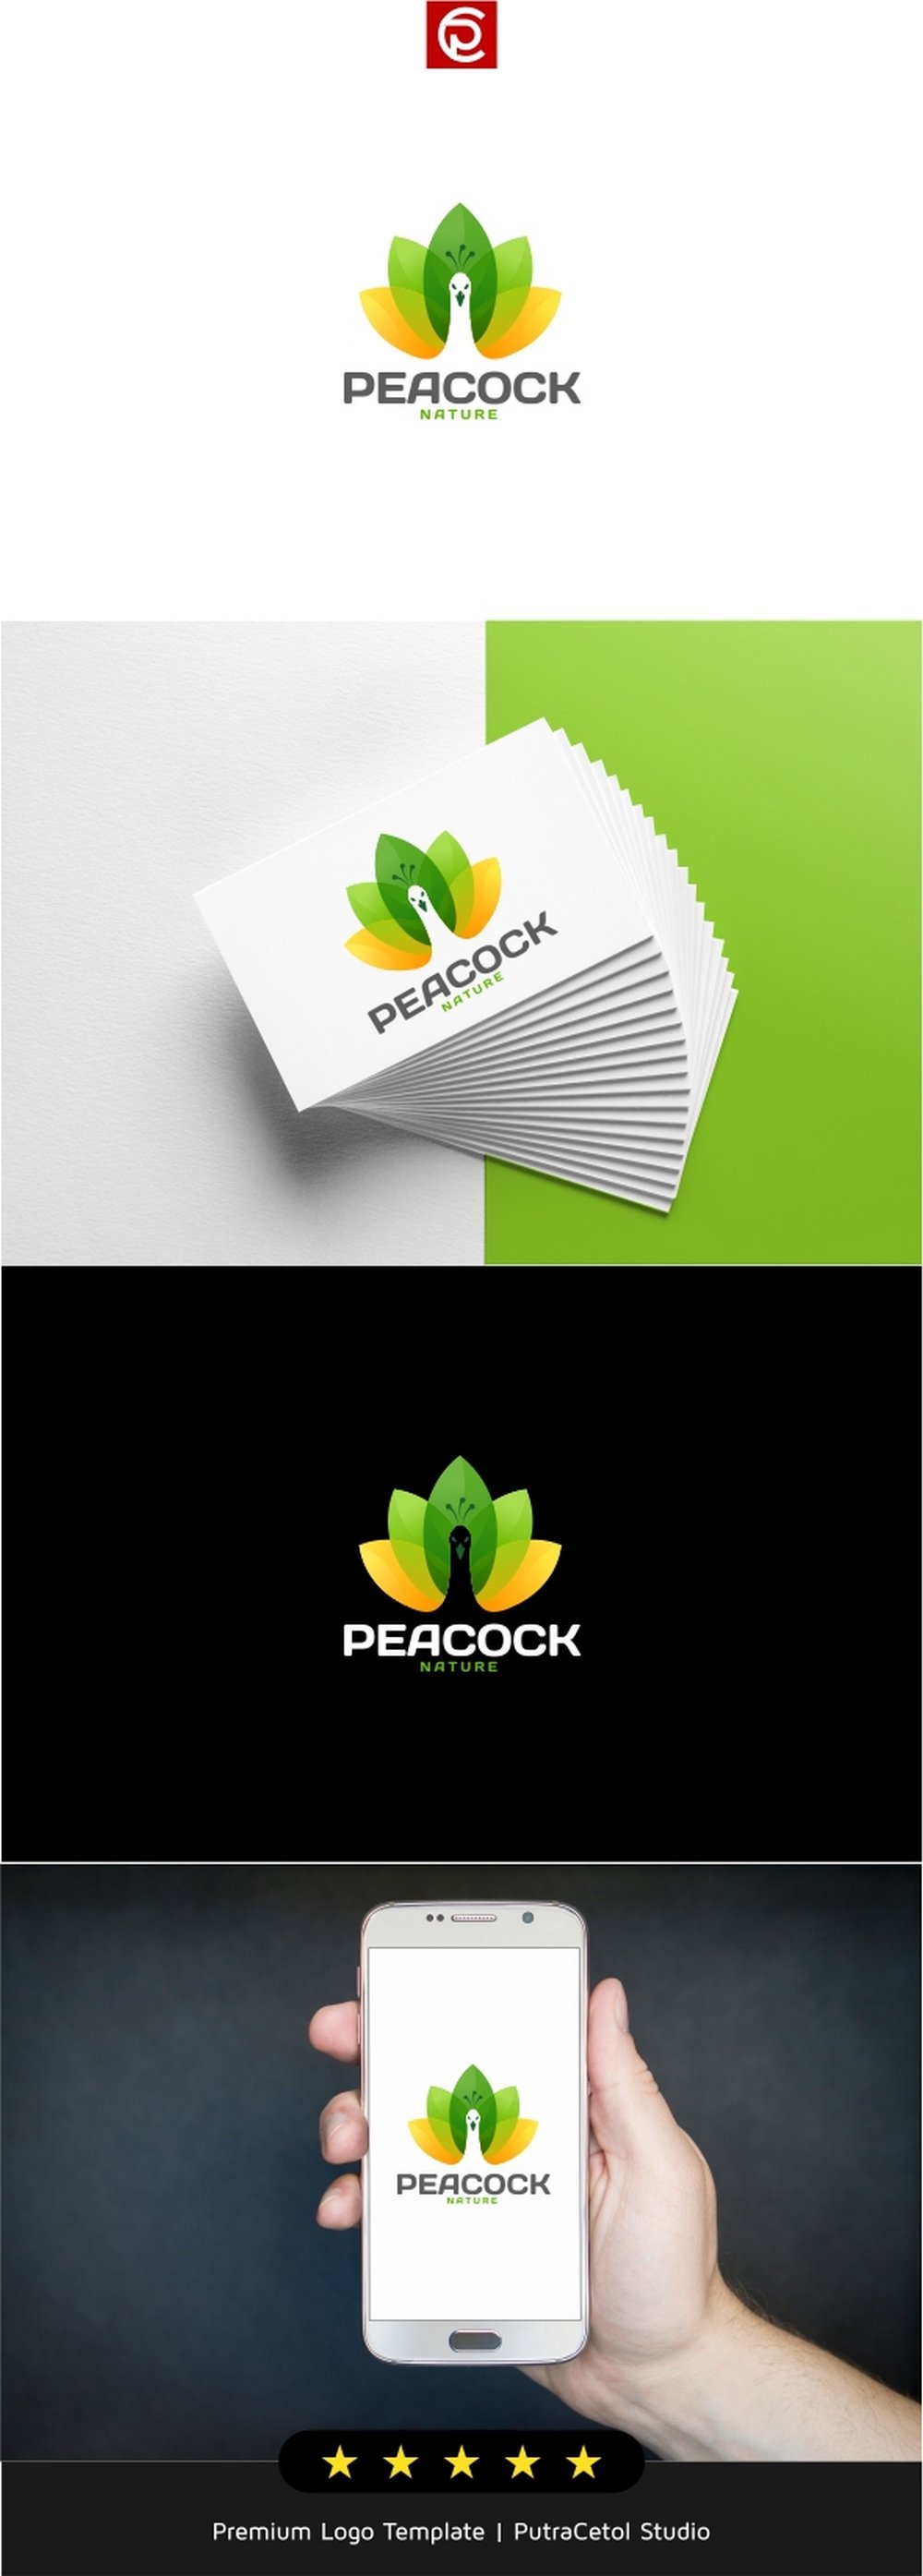 Peacock Leaf Logo cover image.